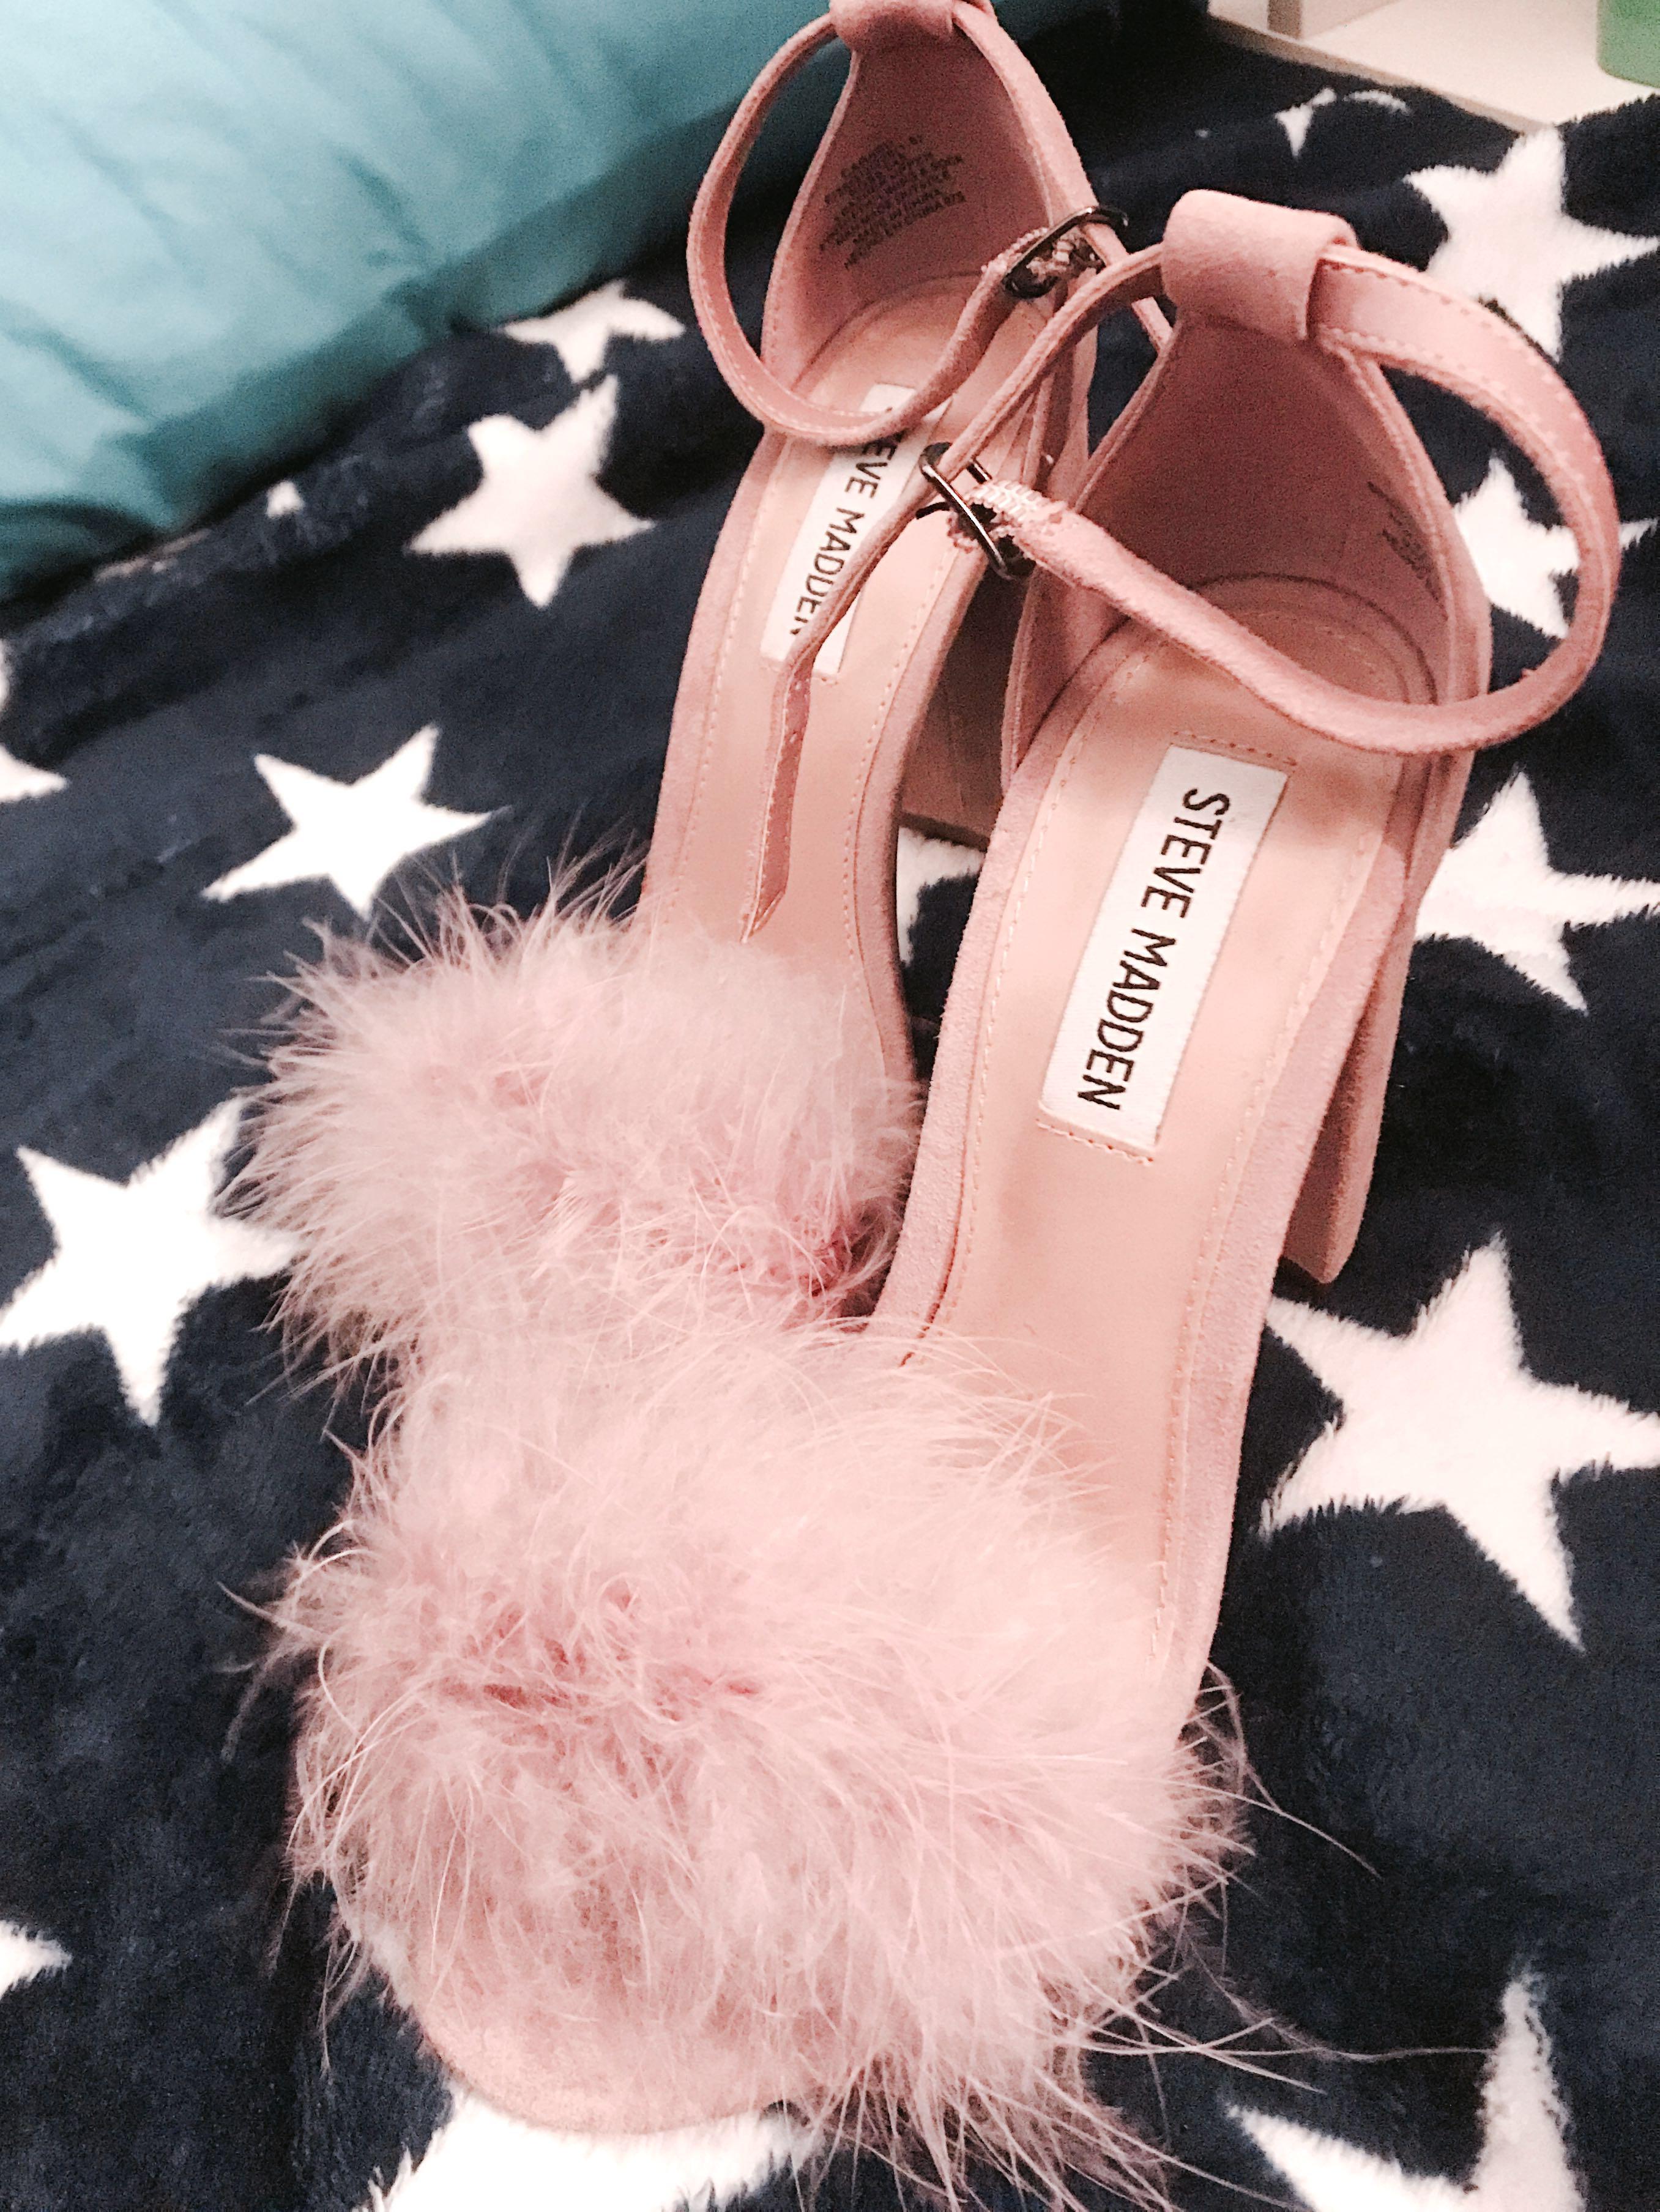 steve madden pink fluffy heels